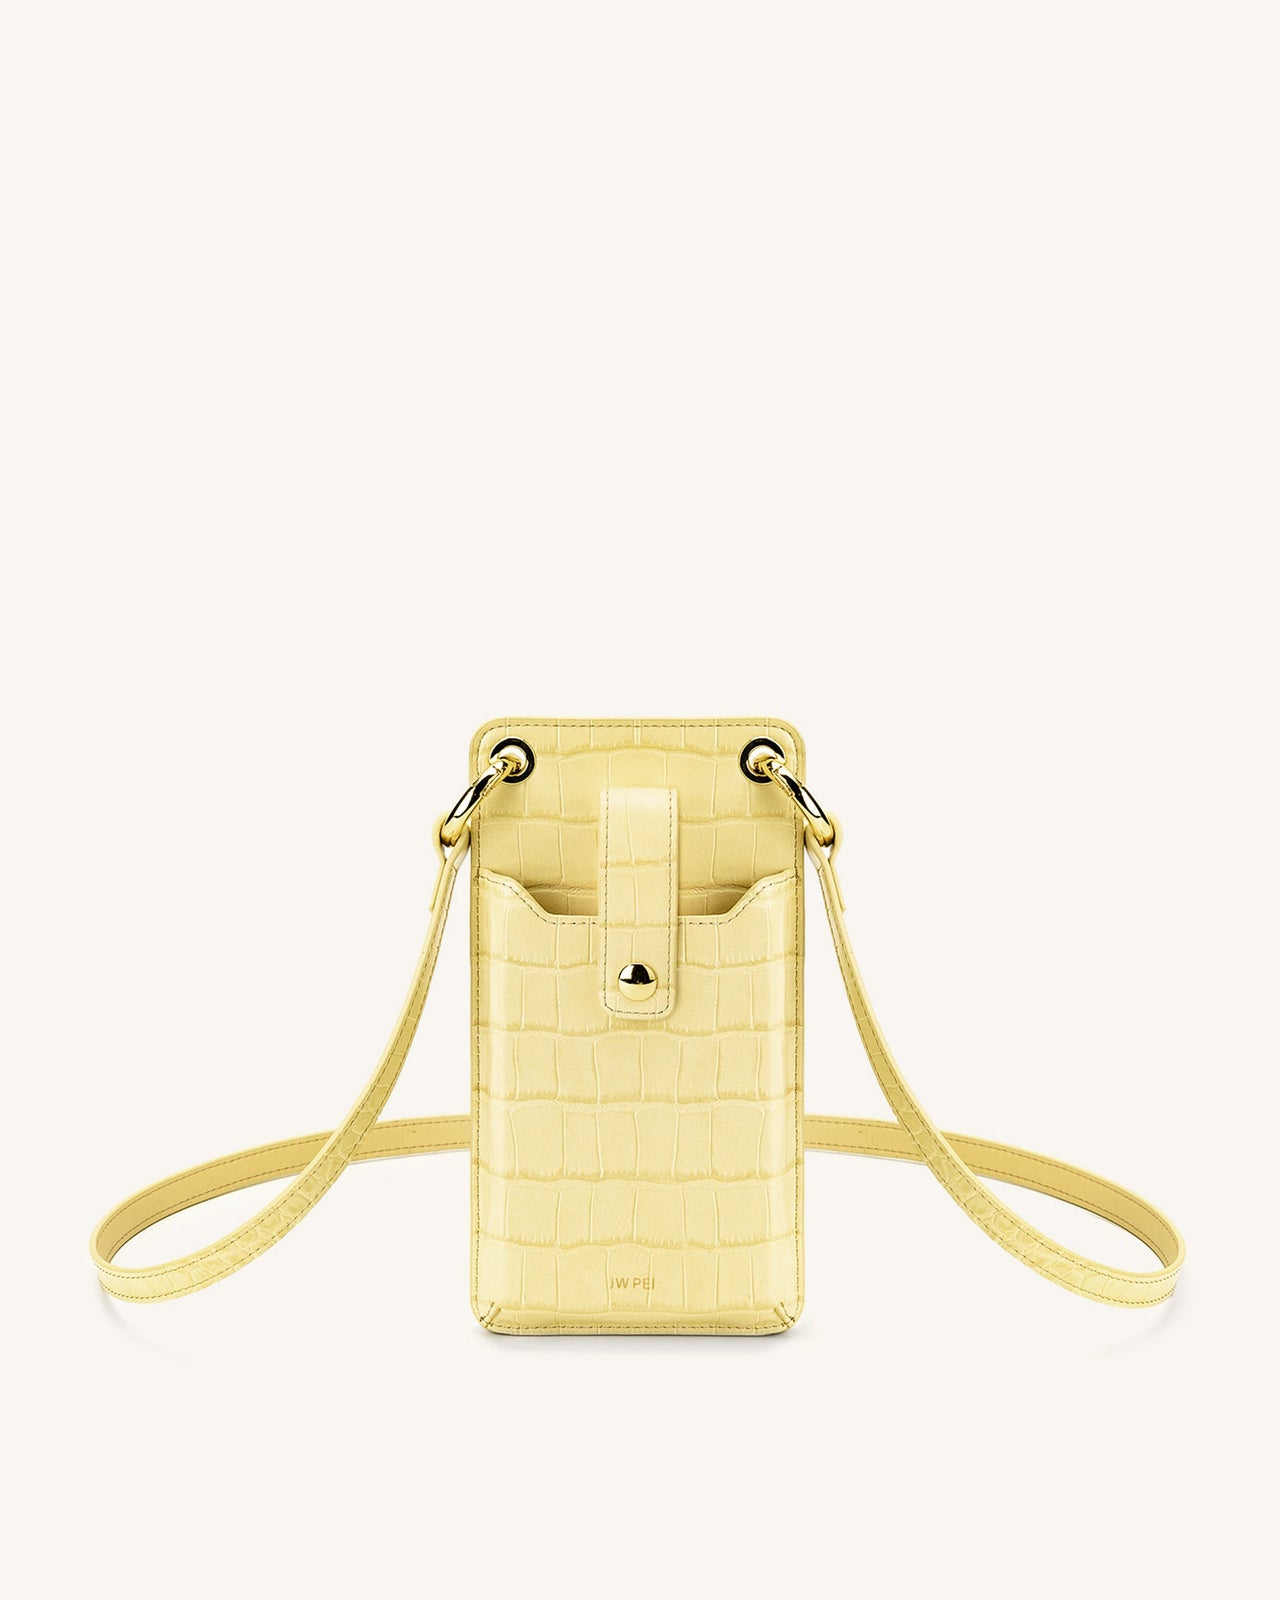 Quinn Phone Bag - Light Yellow Croc